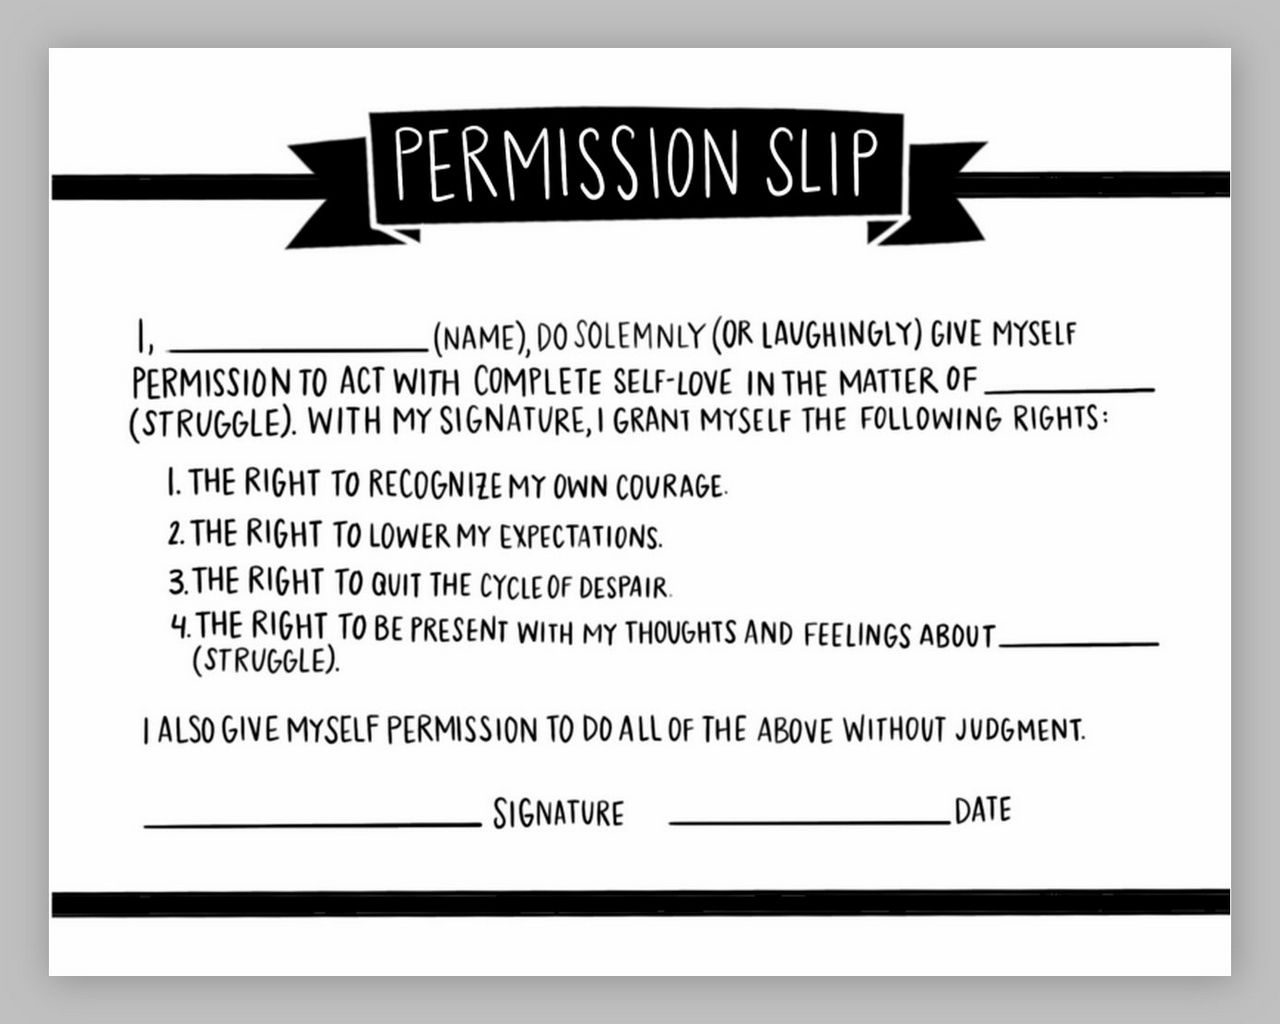 40-free-permission-slip-template-redlinesp